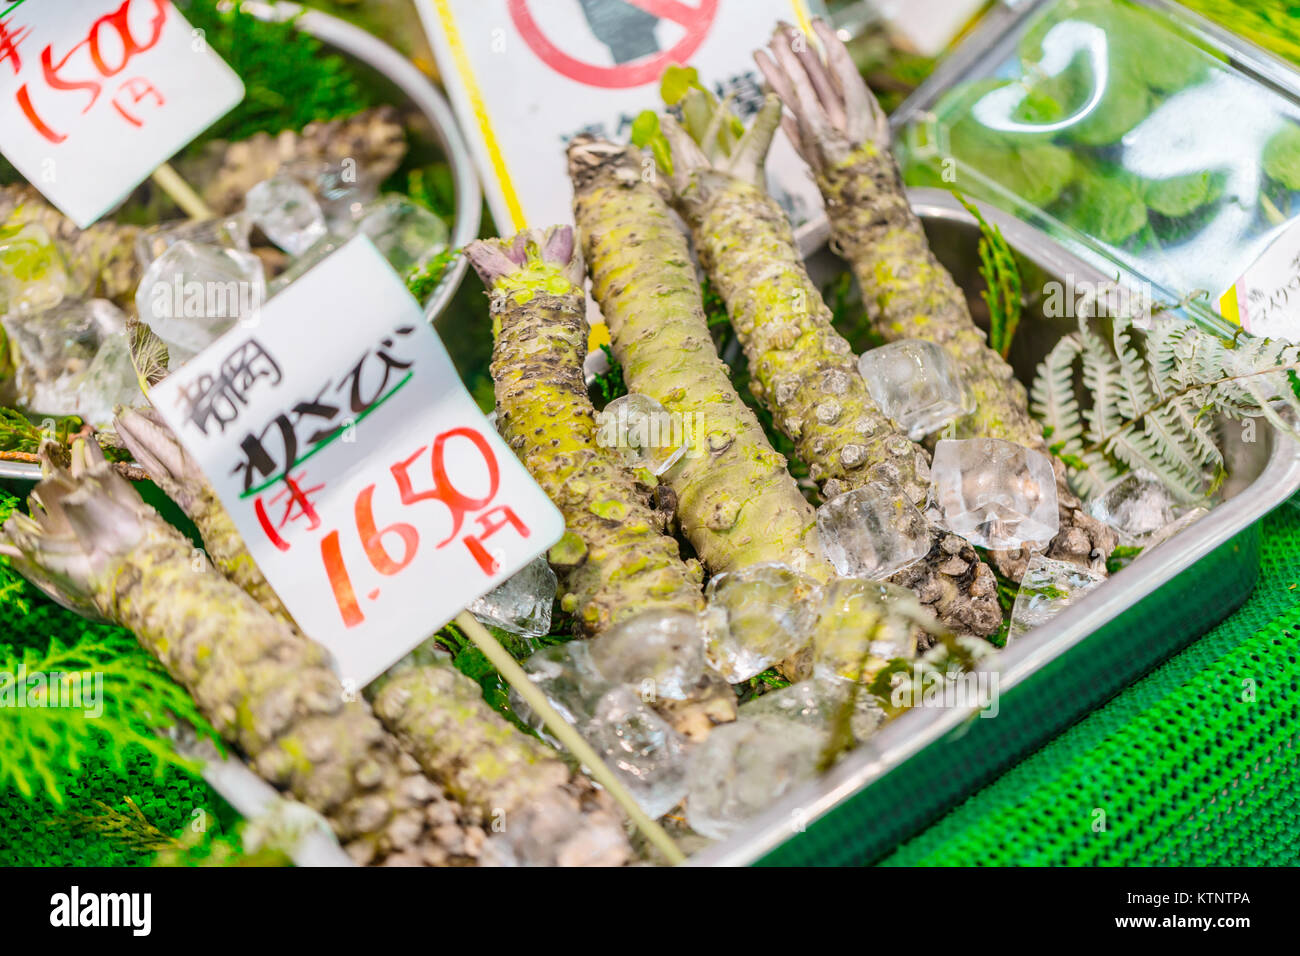 Raíz de Wasabi hierba picante japonés venta en Venta en Mercado Kuromon Ichiba Osaka en Japón. Foto de stock